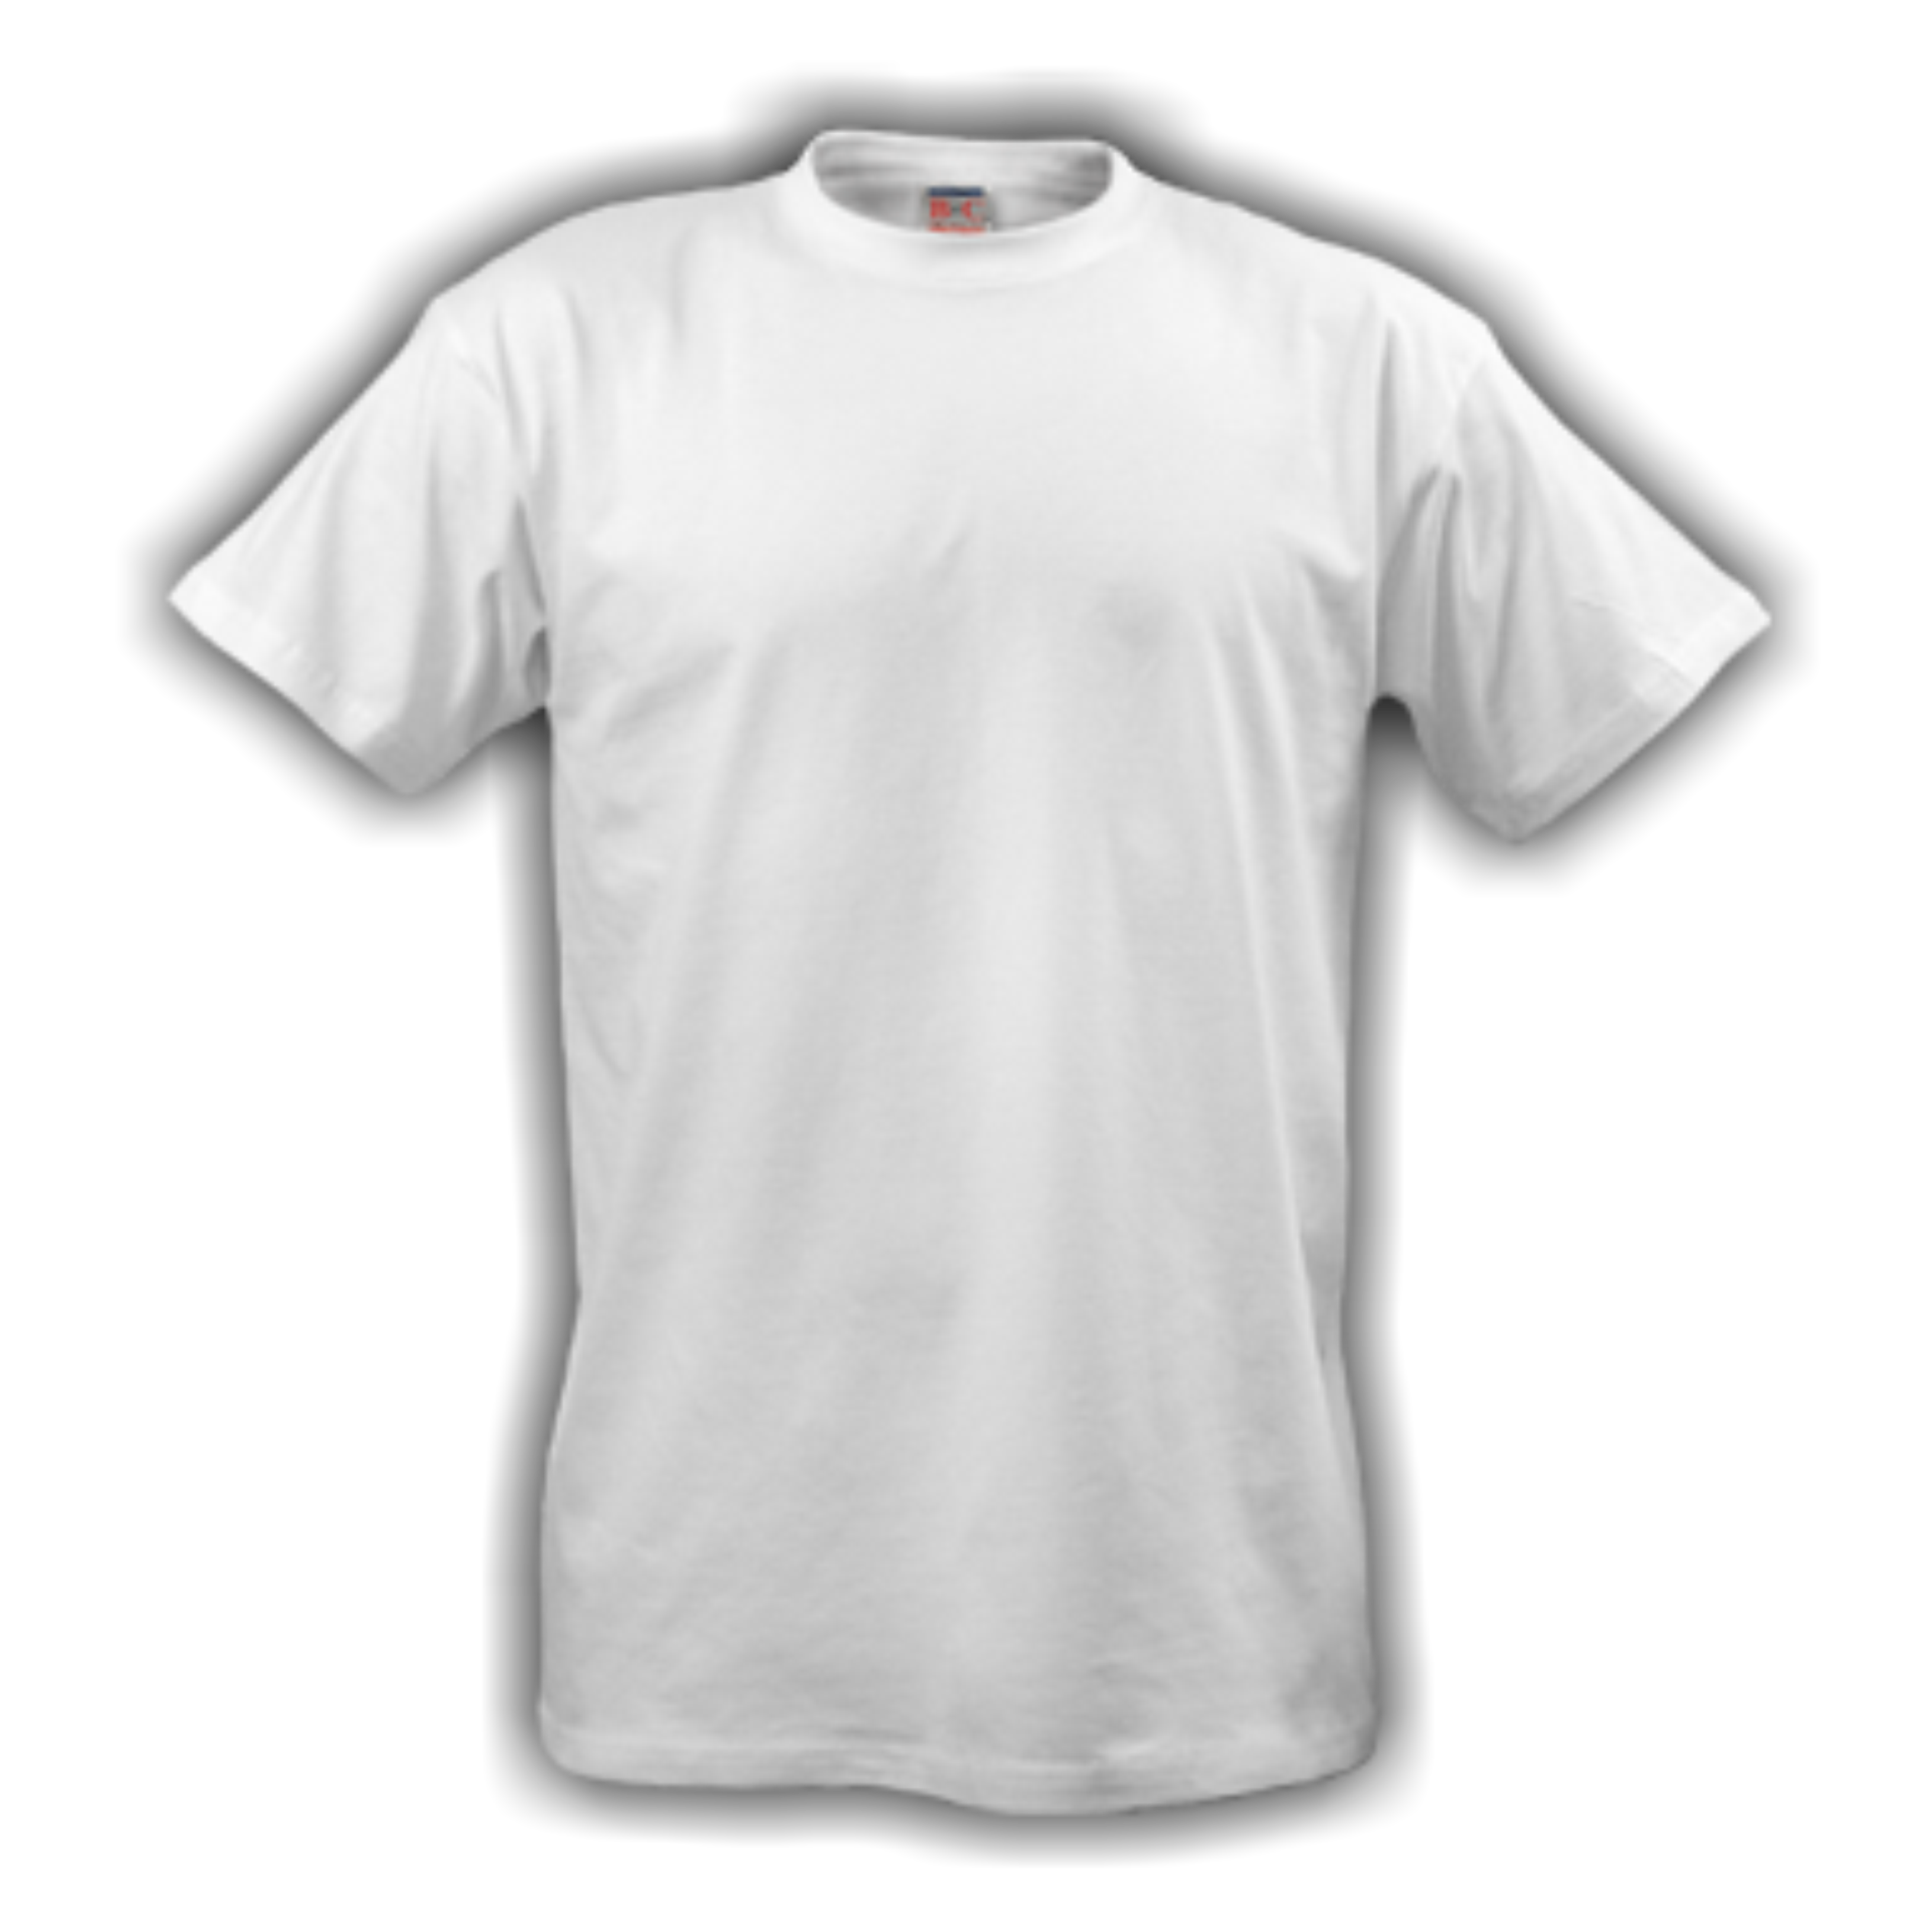 White T-shirt PNG image